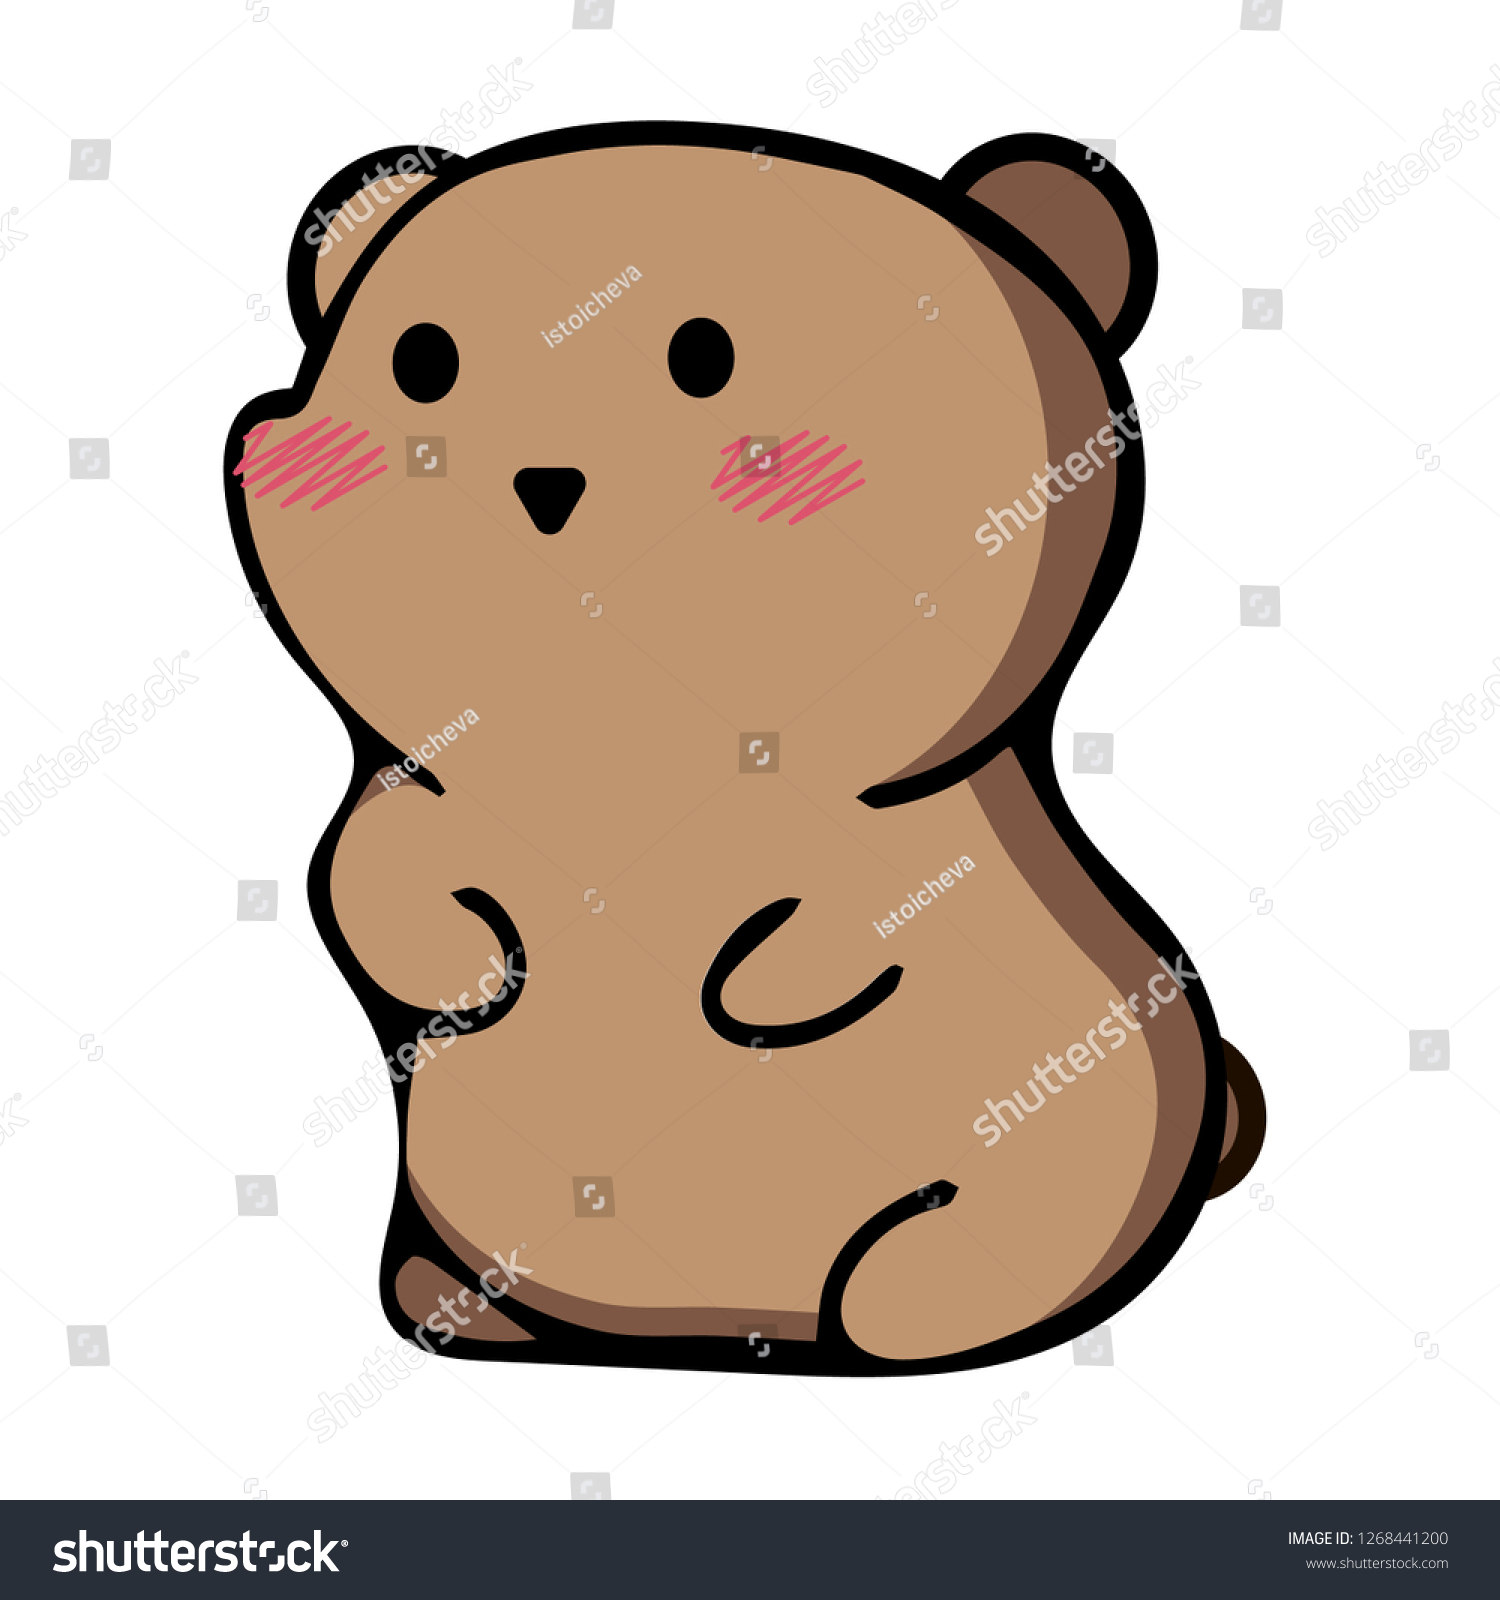 perfect teddy bear